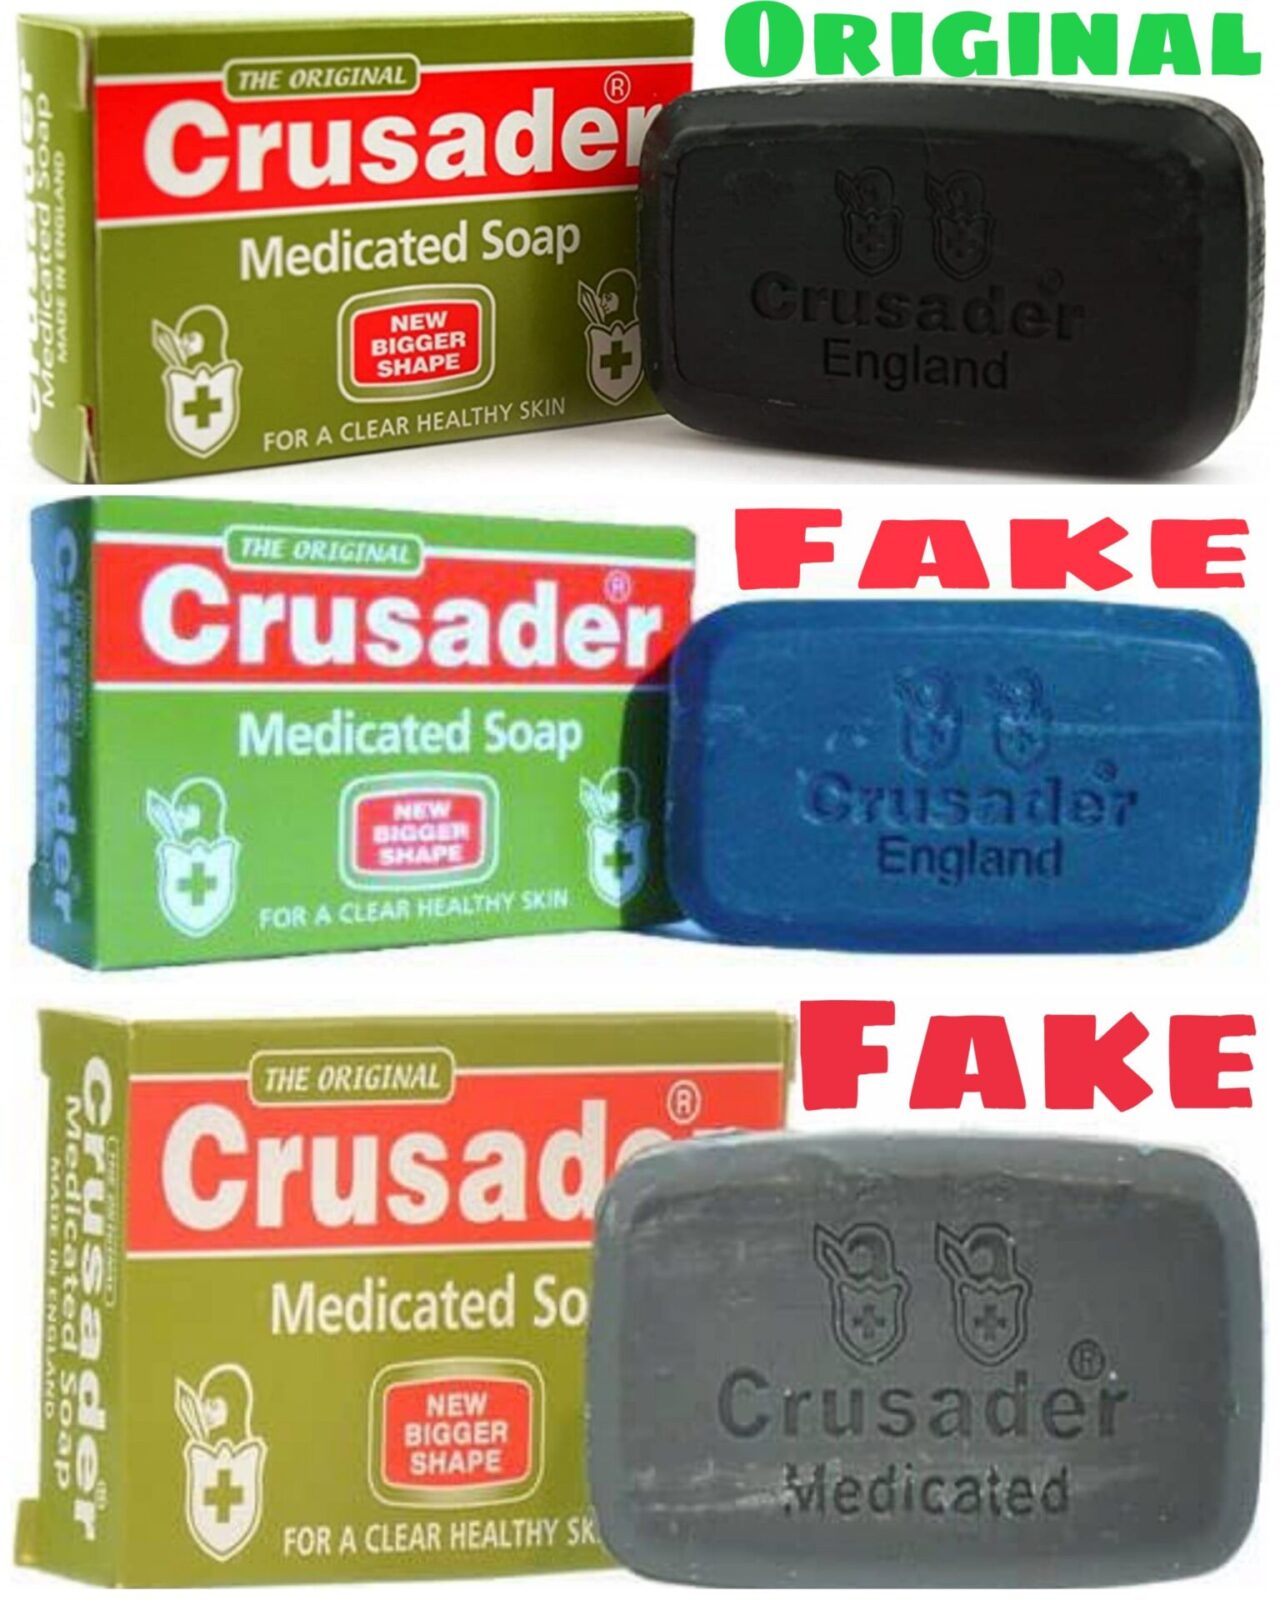 Crusader Medicated Soap